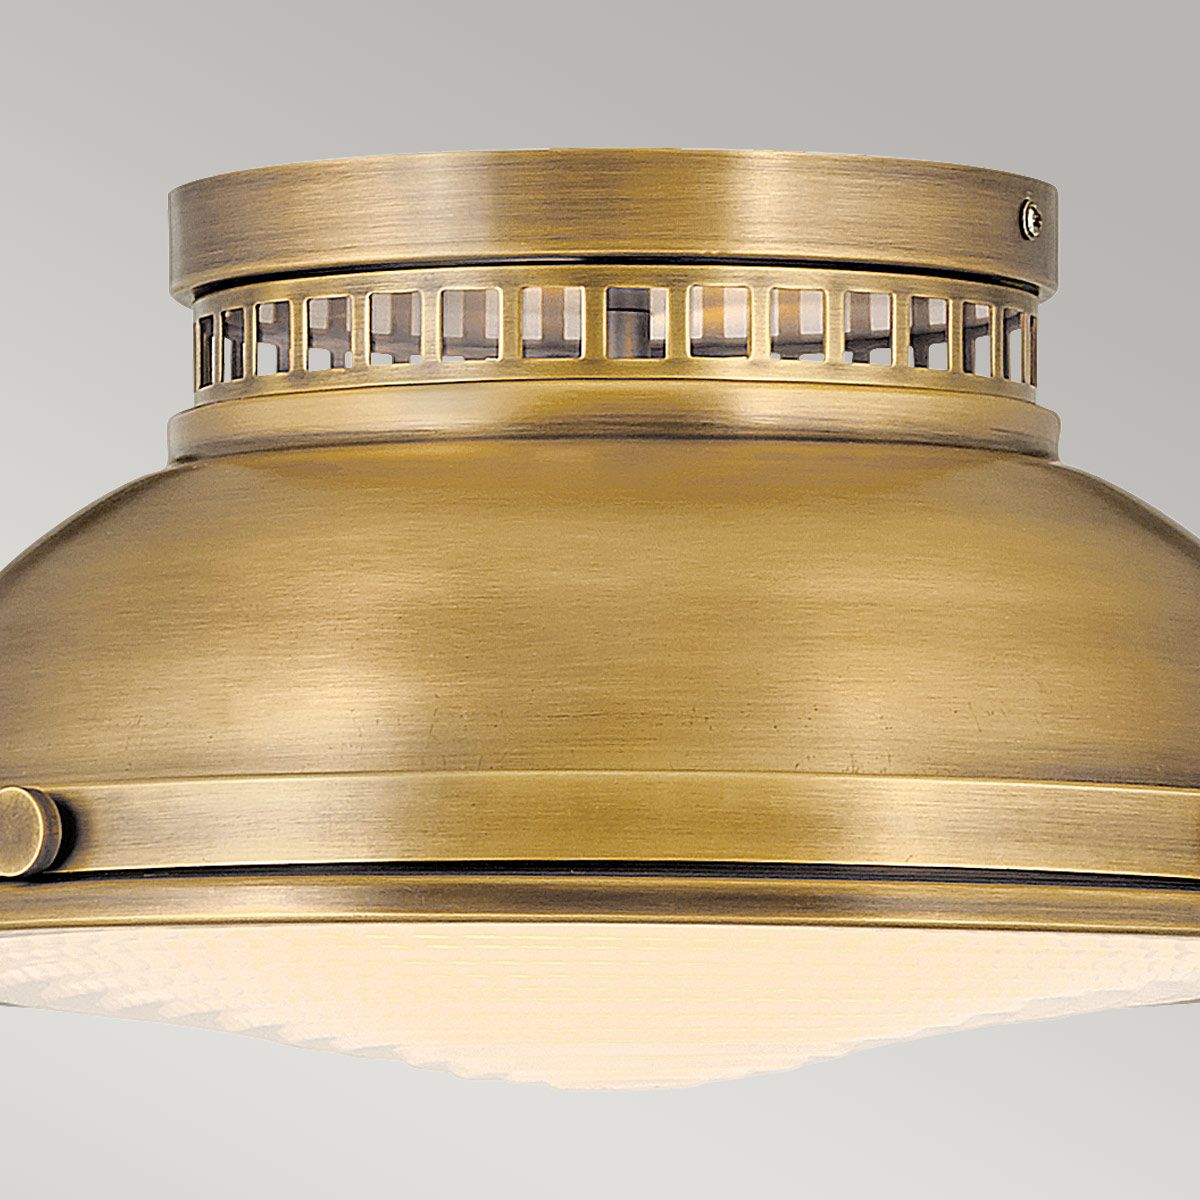 Deckenlampe Messing antik 2x E27 Ø 32 cm Industrial Design